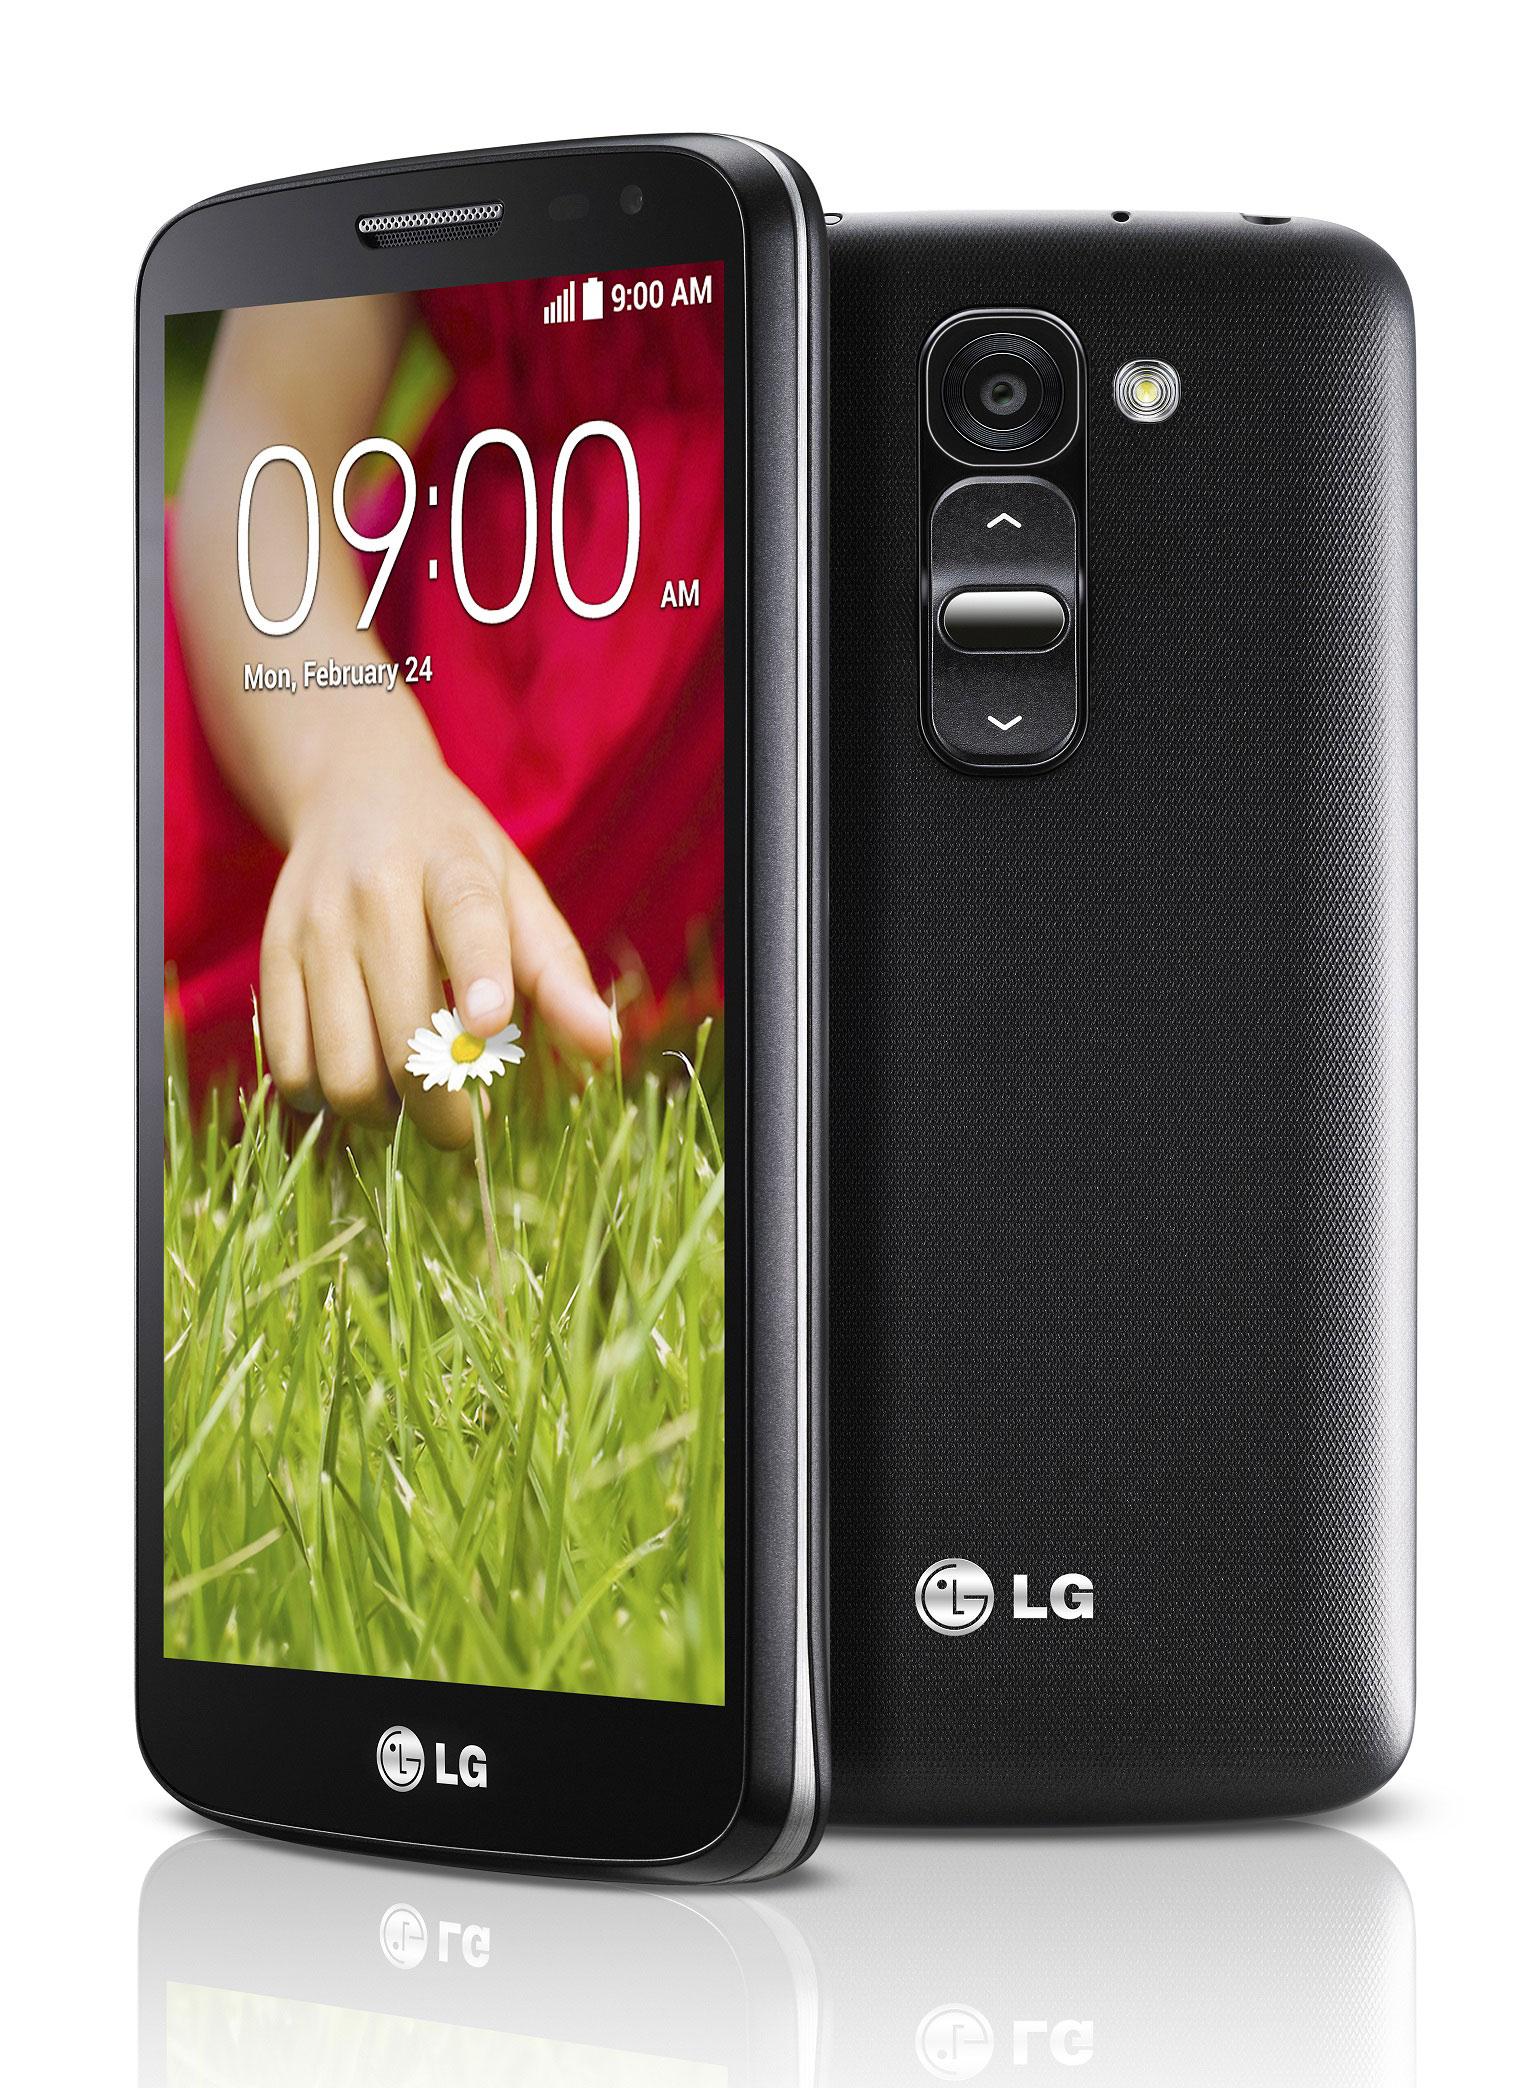 LG G2 Mini vista frontal y trasera